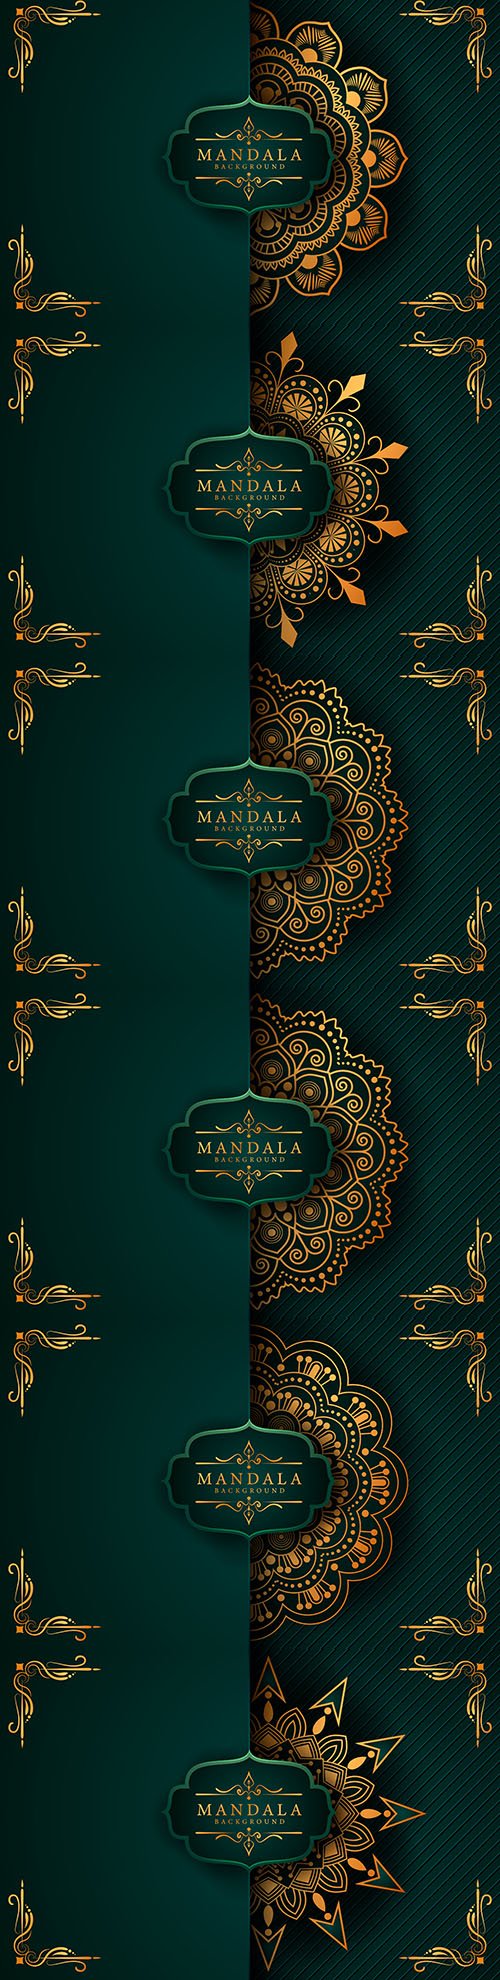 Mandala creative luxury green design background 7